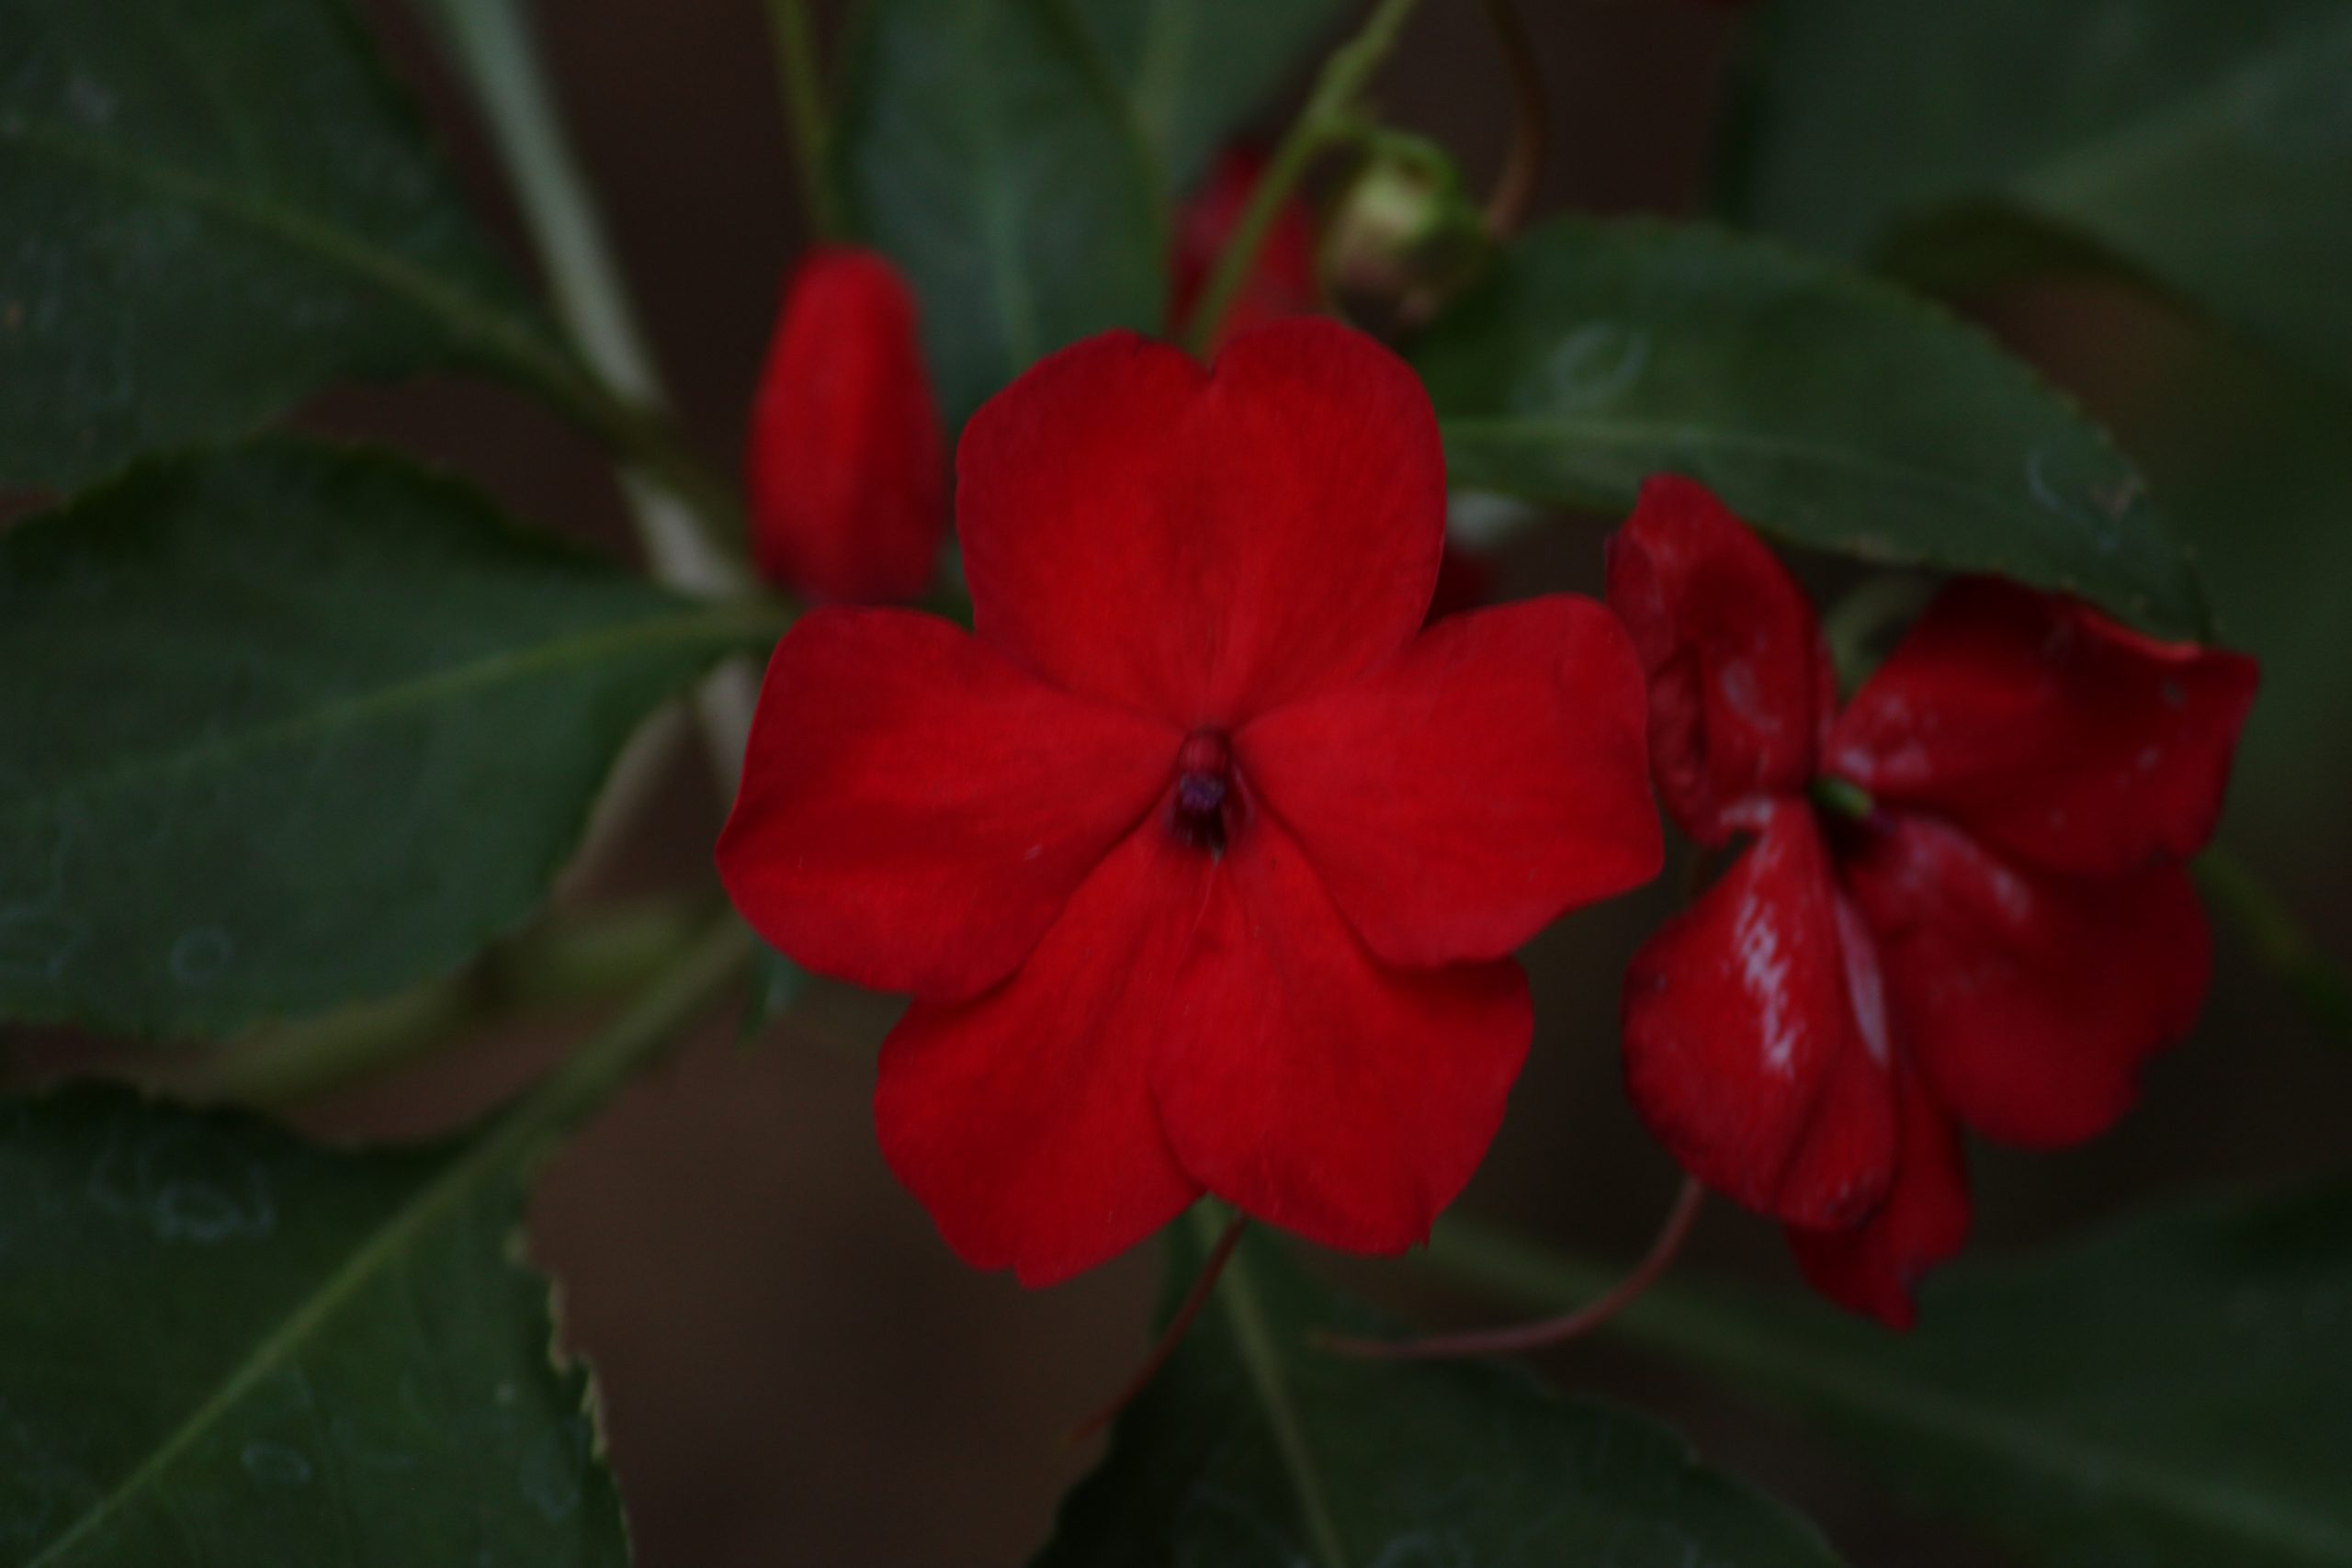 Red flowers in a garden